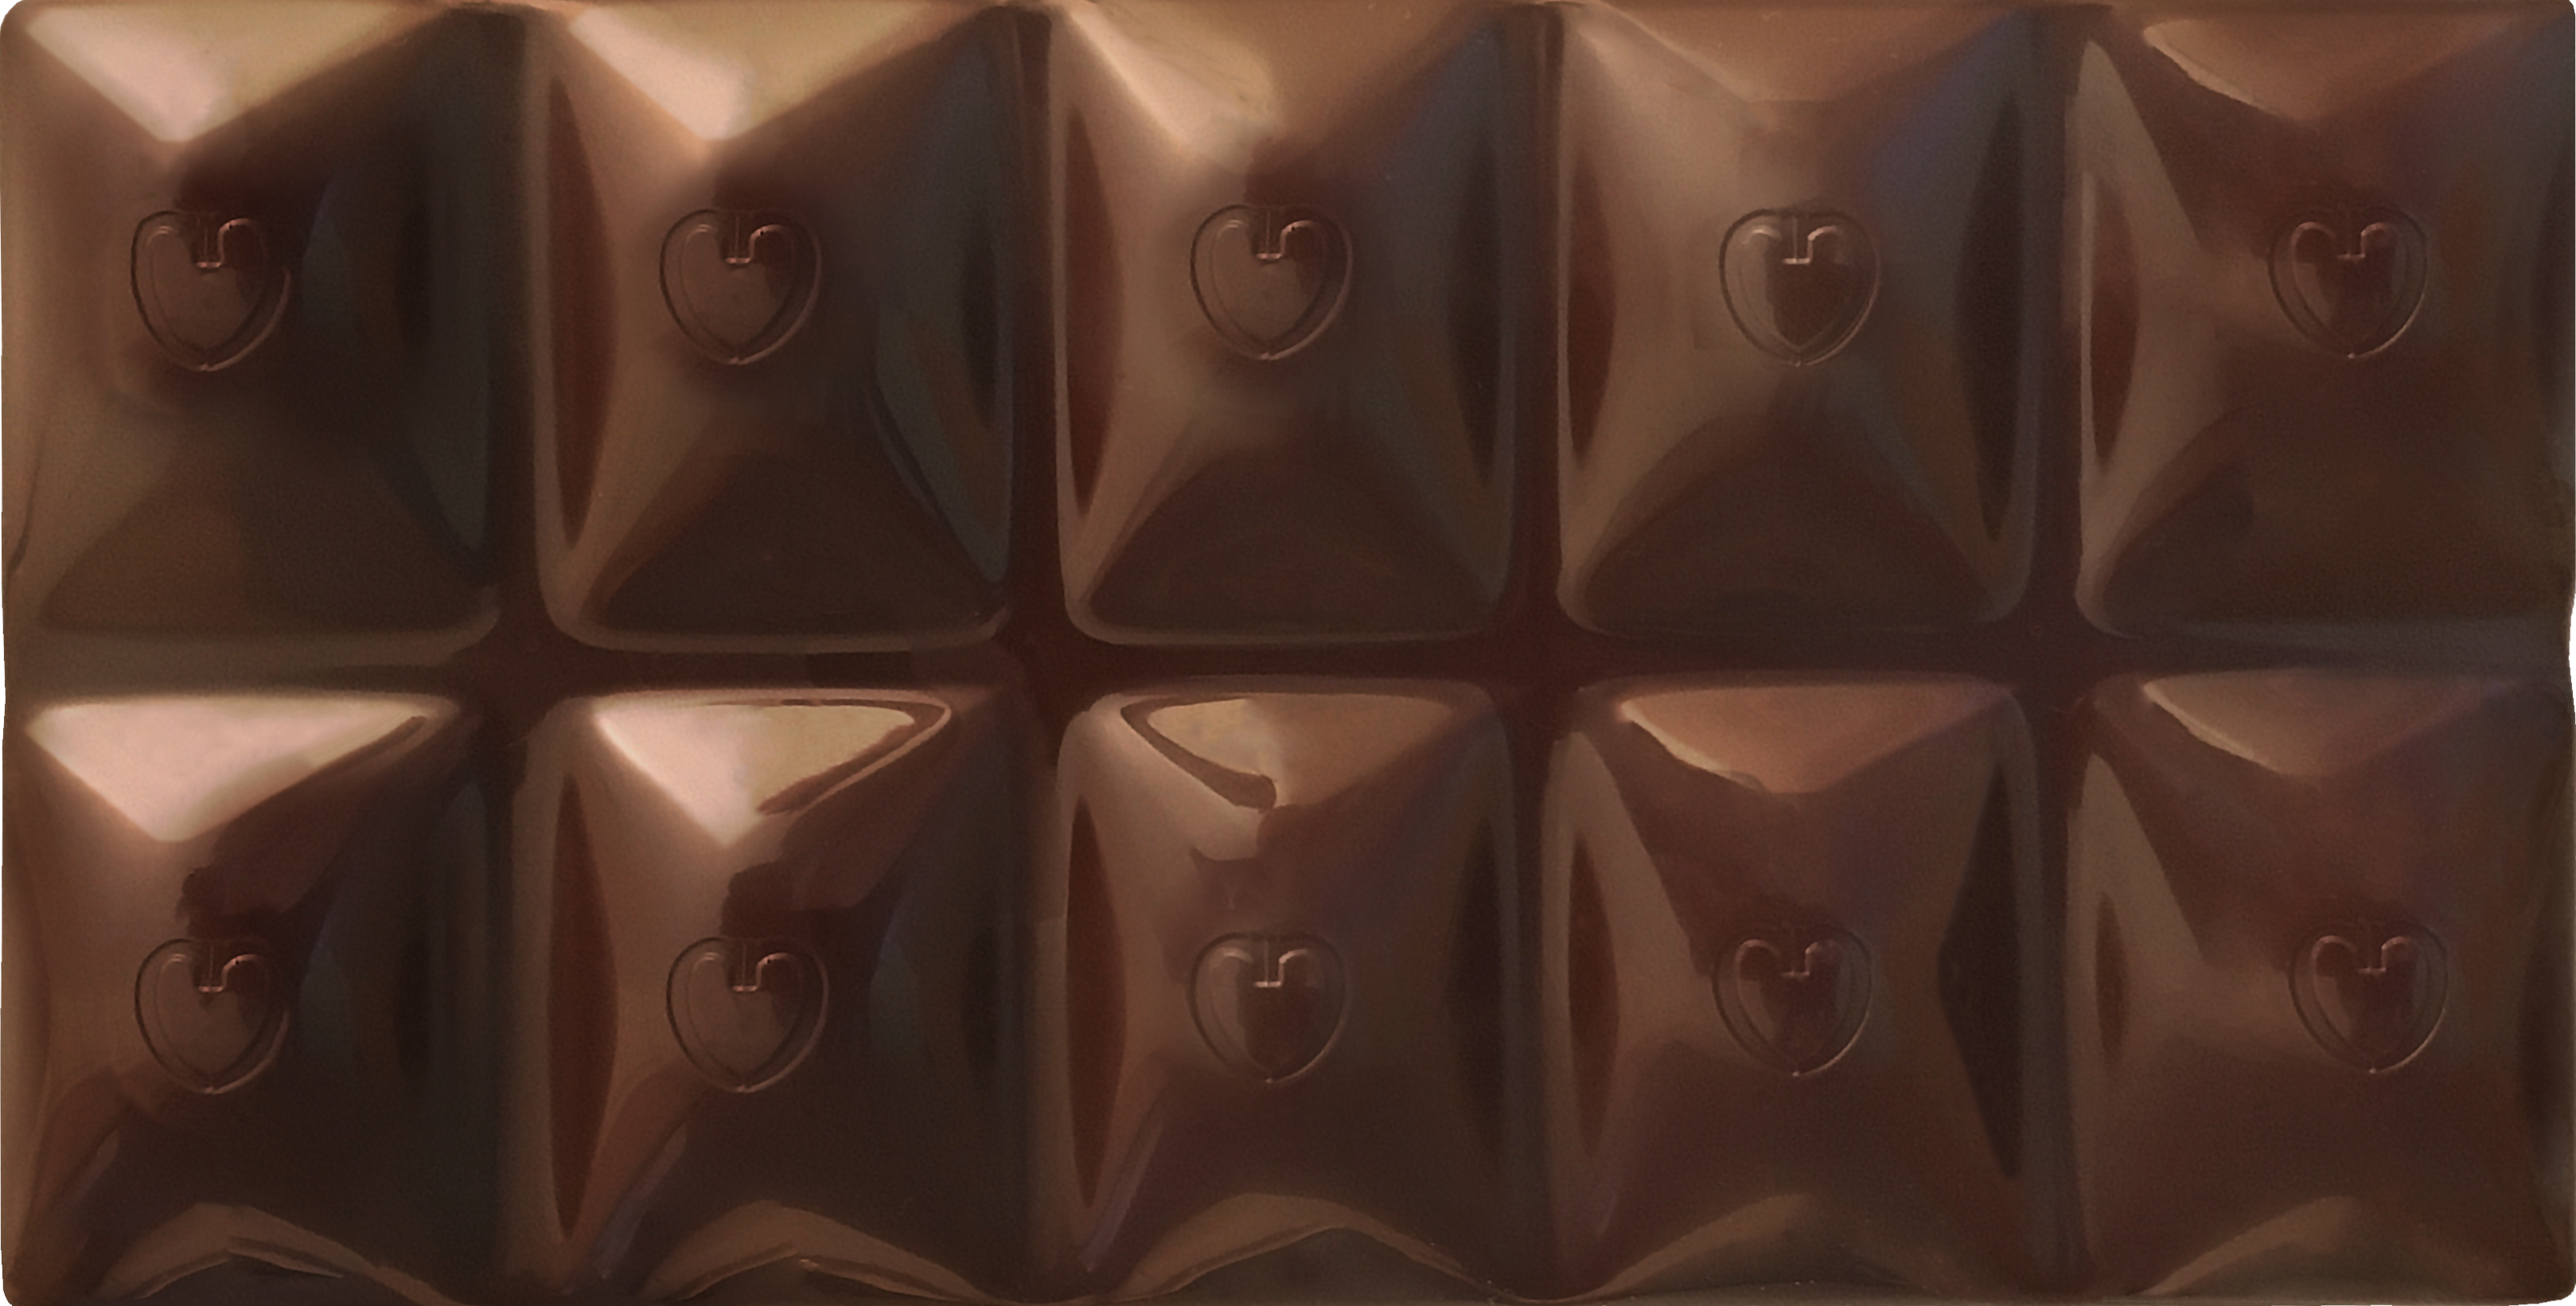 Salted Caramel Cups Dark Chocolate (50-Count Change Maker) - Chocolove -  Premium Chocolate